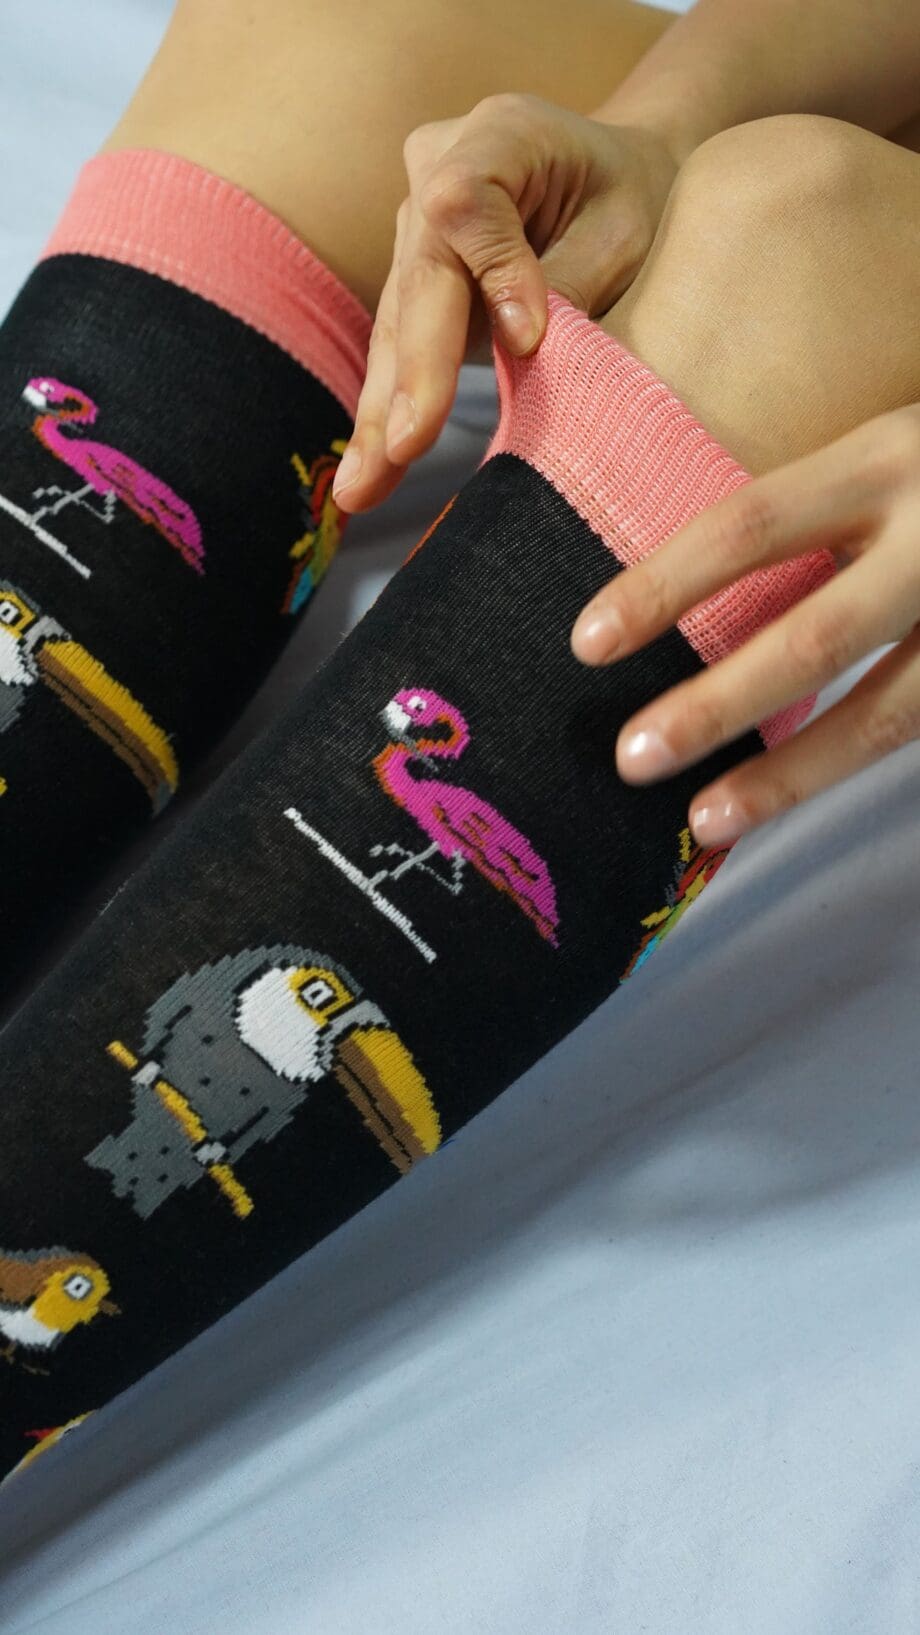 "Wild Birds" Women's Knee High Socks by Socks n Socks